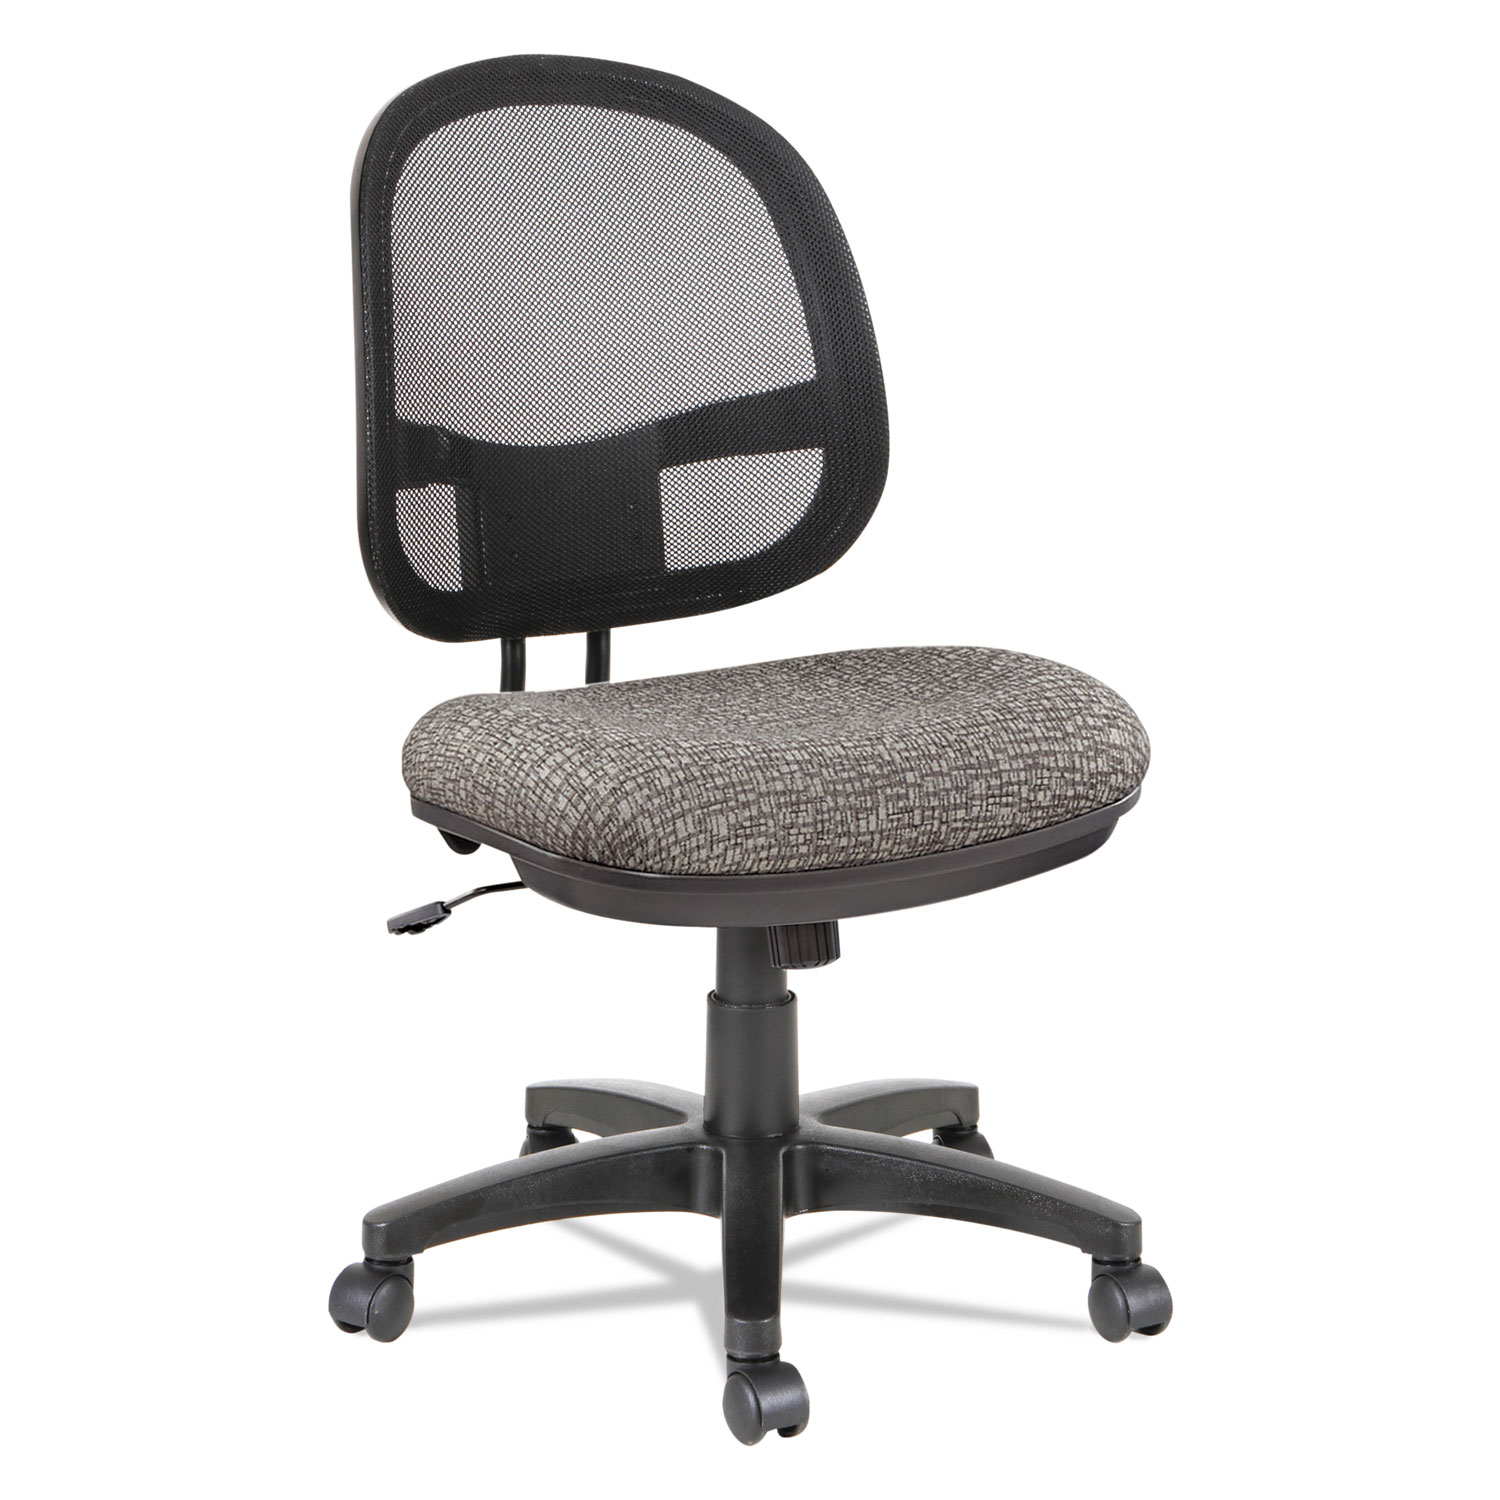  Alera ALEIN4844 Alera Interval Series Swivel/Tilt Mesh Chair, Supports up to 275 lbs., Graphite Gray Seat/Graphite Gray Back, Black Base (ALEIN4844) 